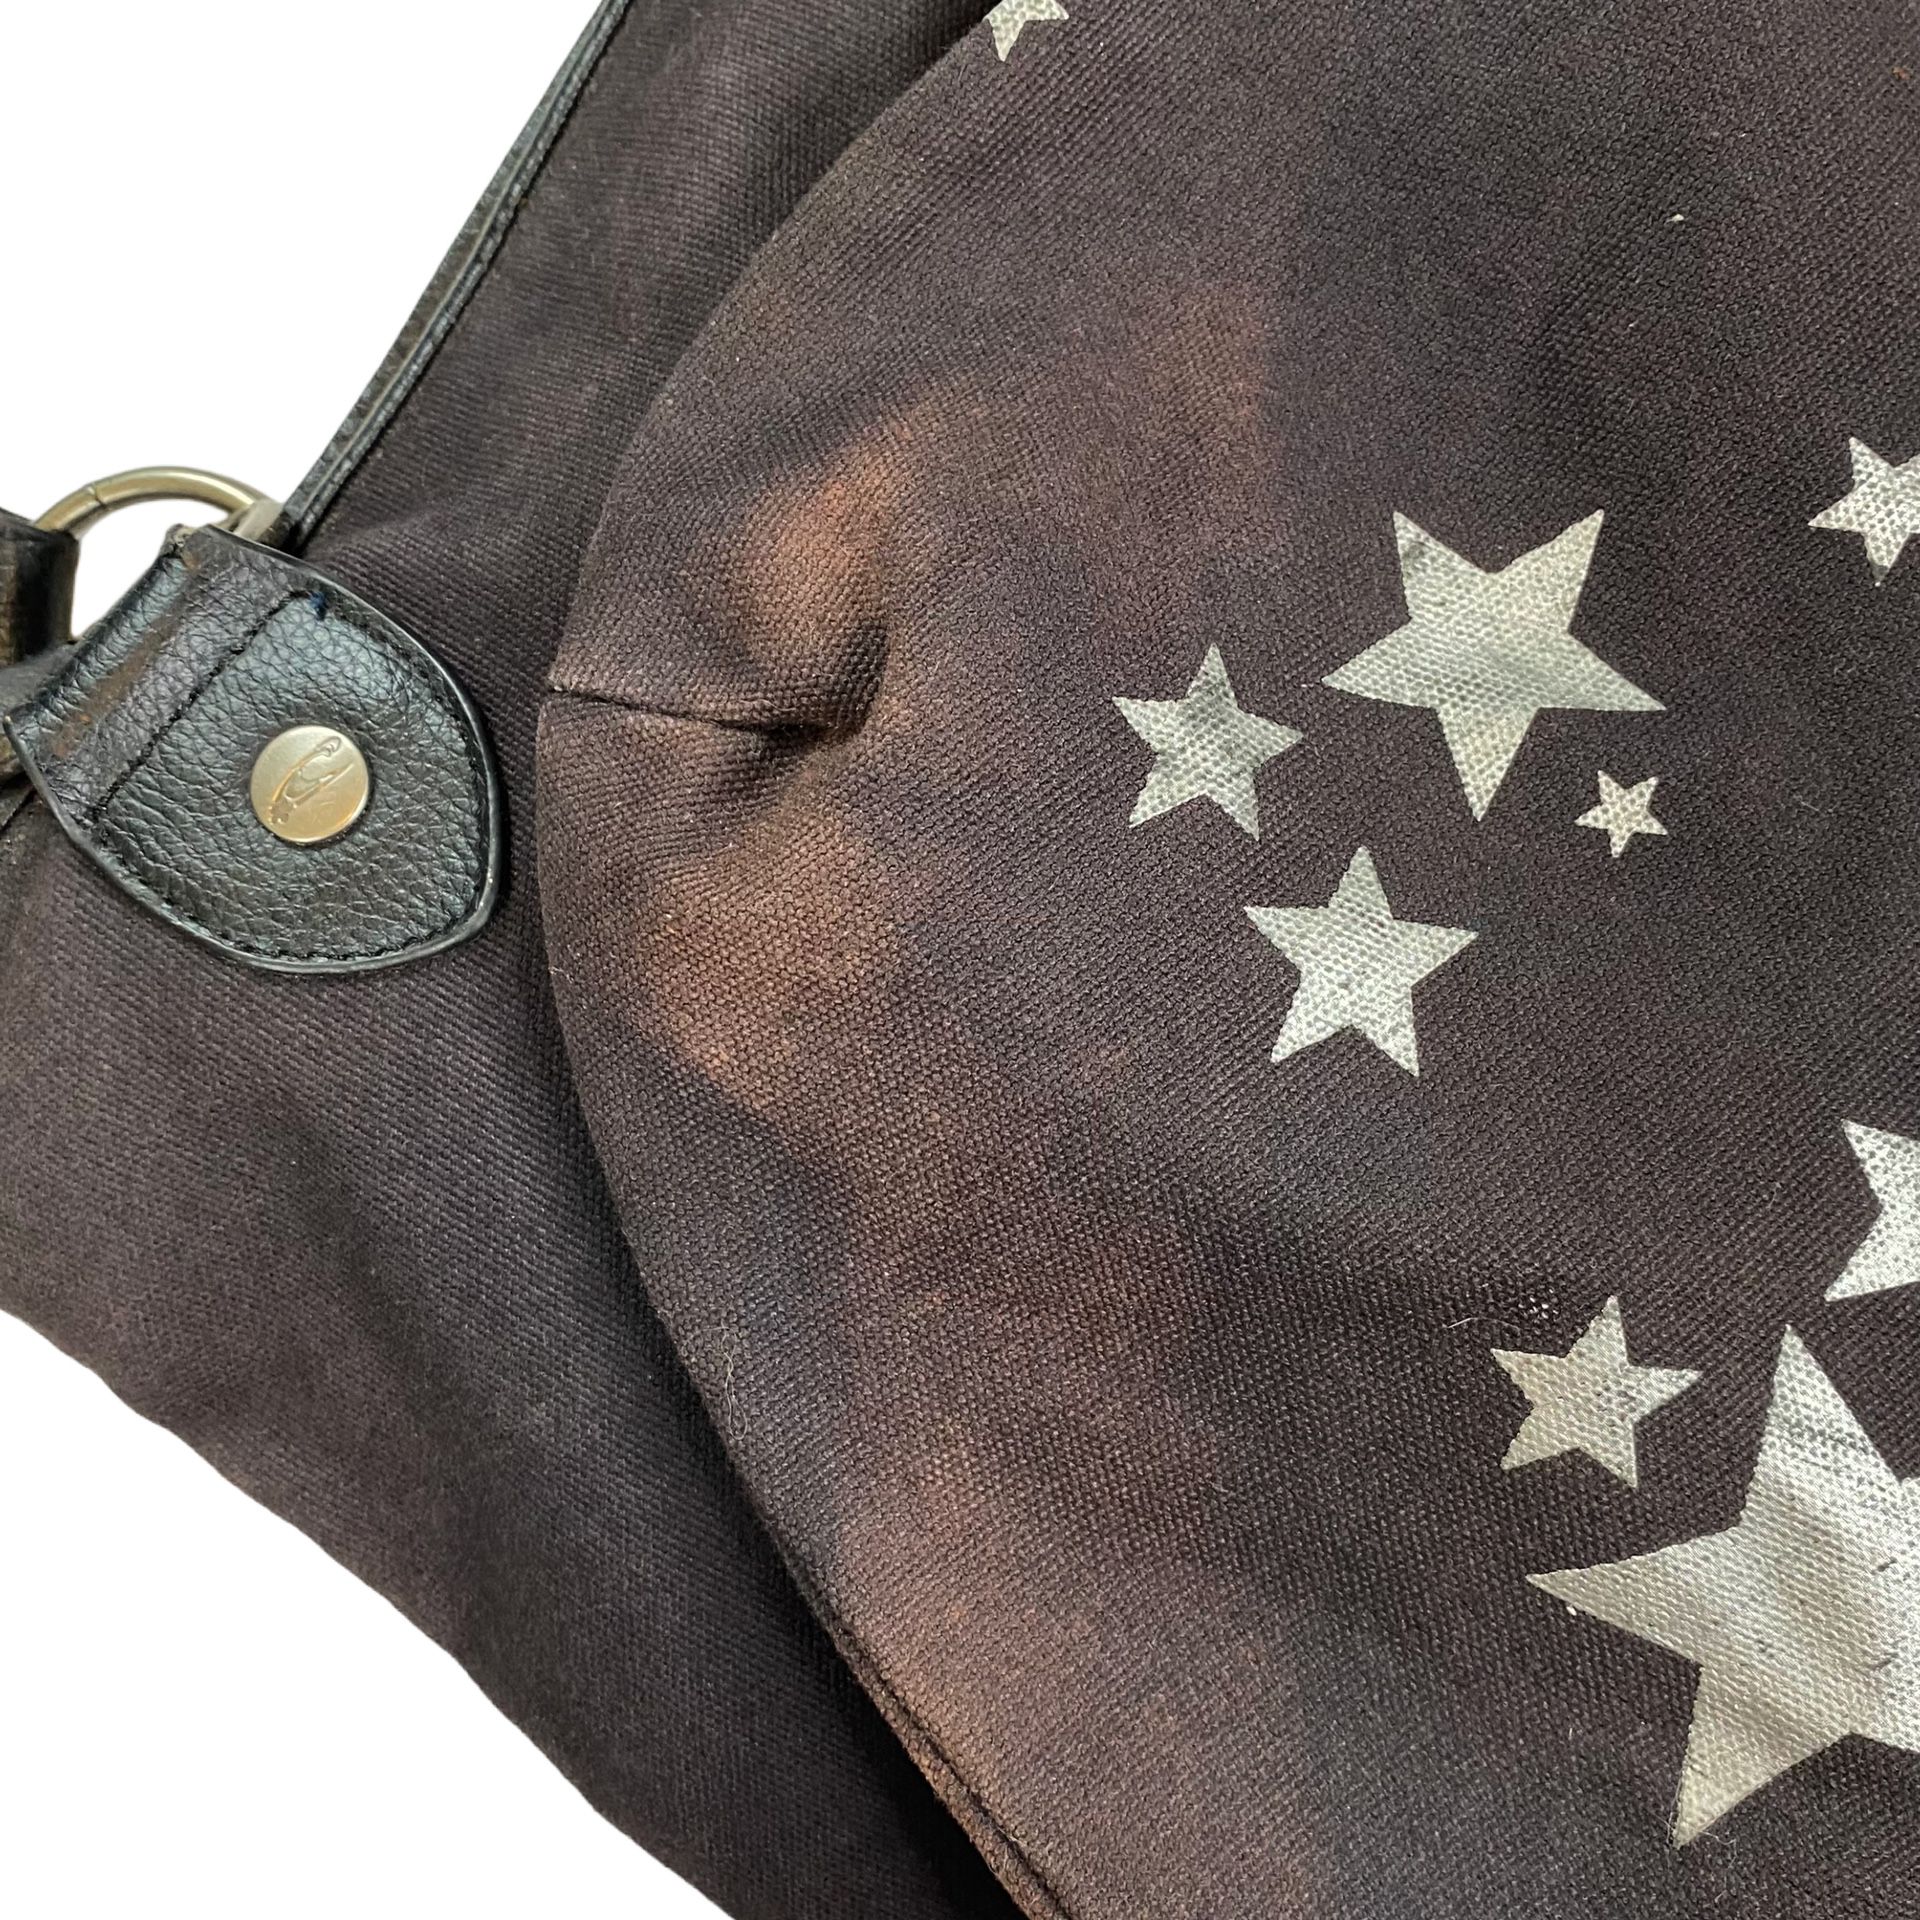 O’Neill Distressed Black Star Tote Bag